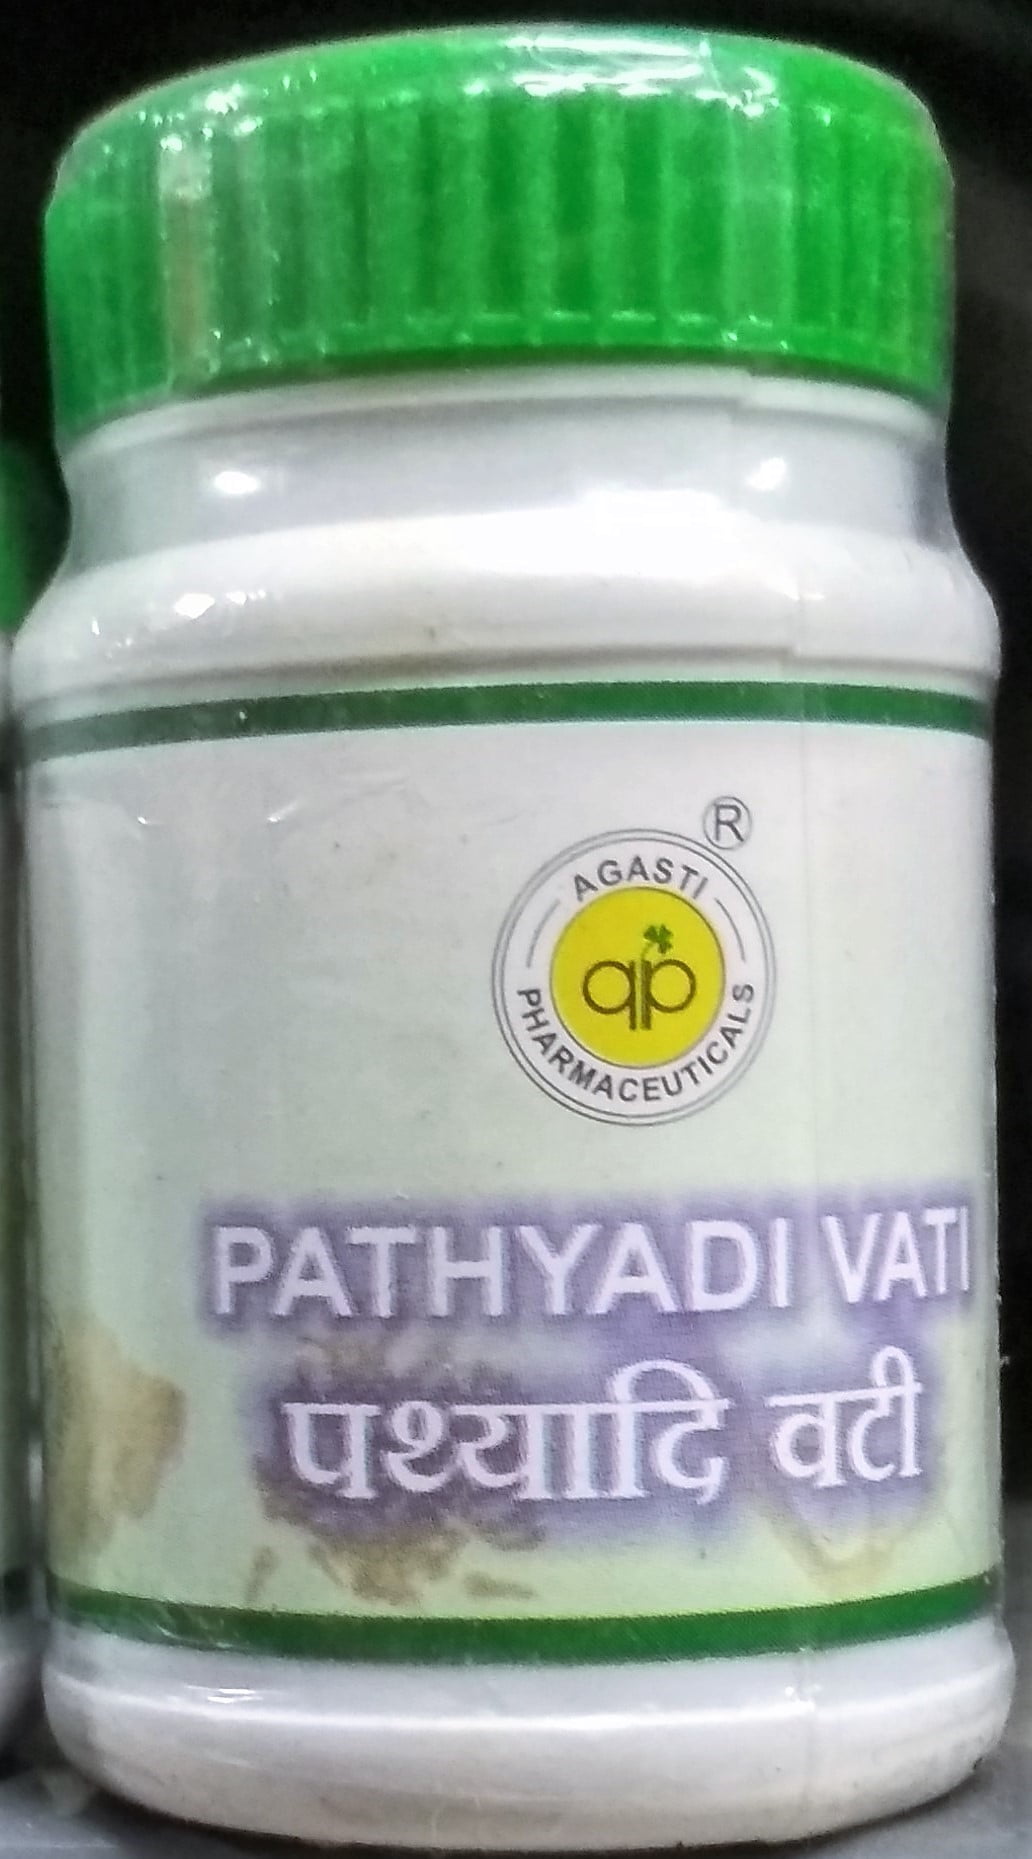 pathyadi vati 1 kg 2000 tablet upto 15% off agasti pharmaceuticals